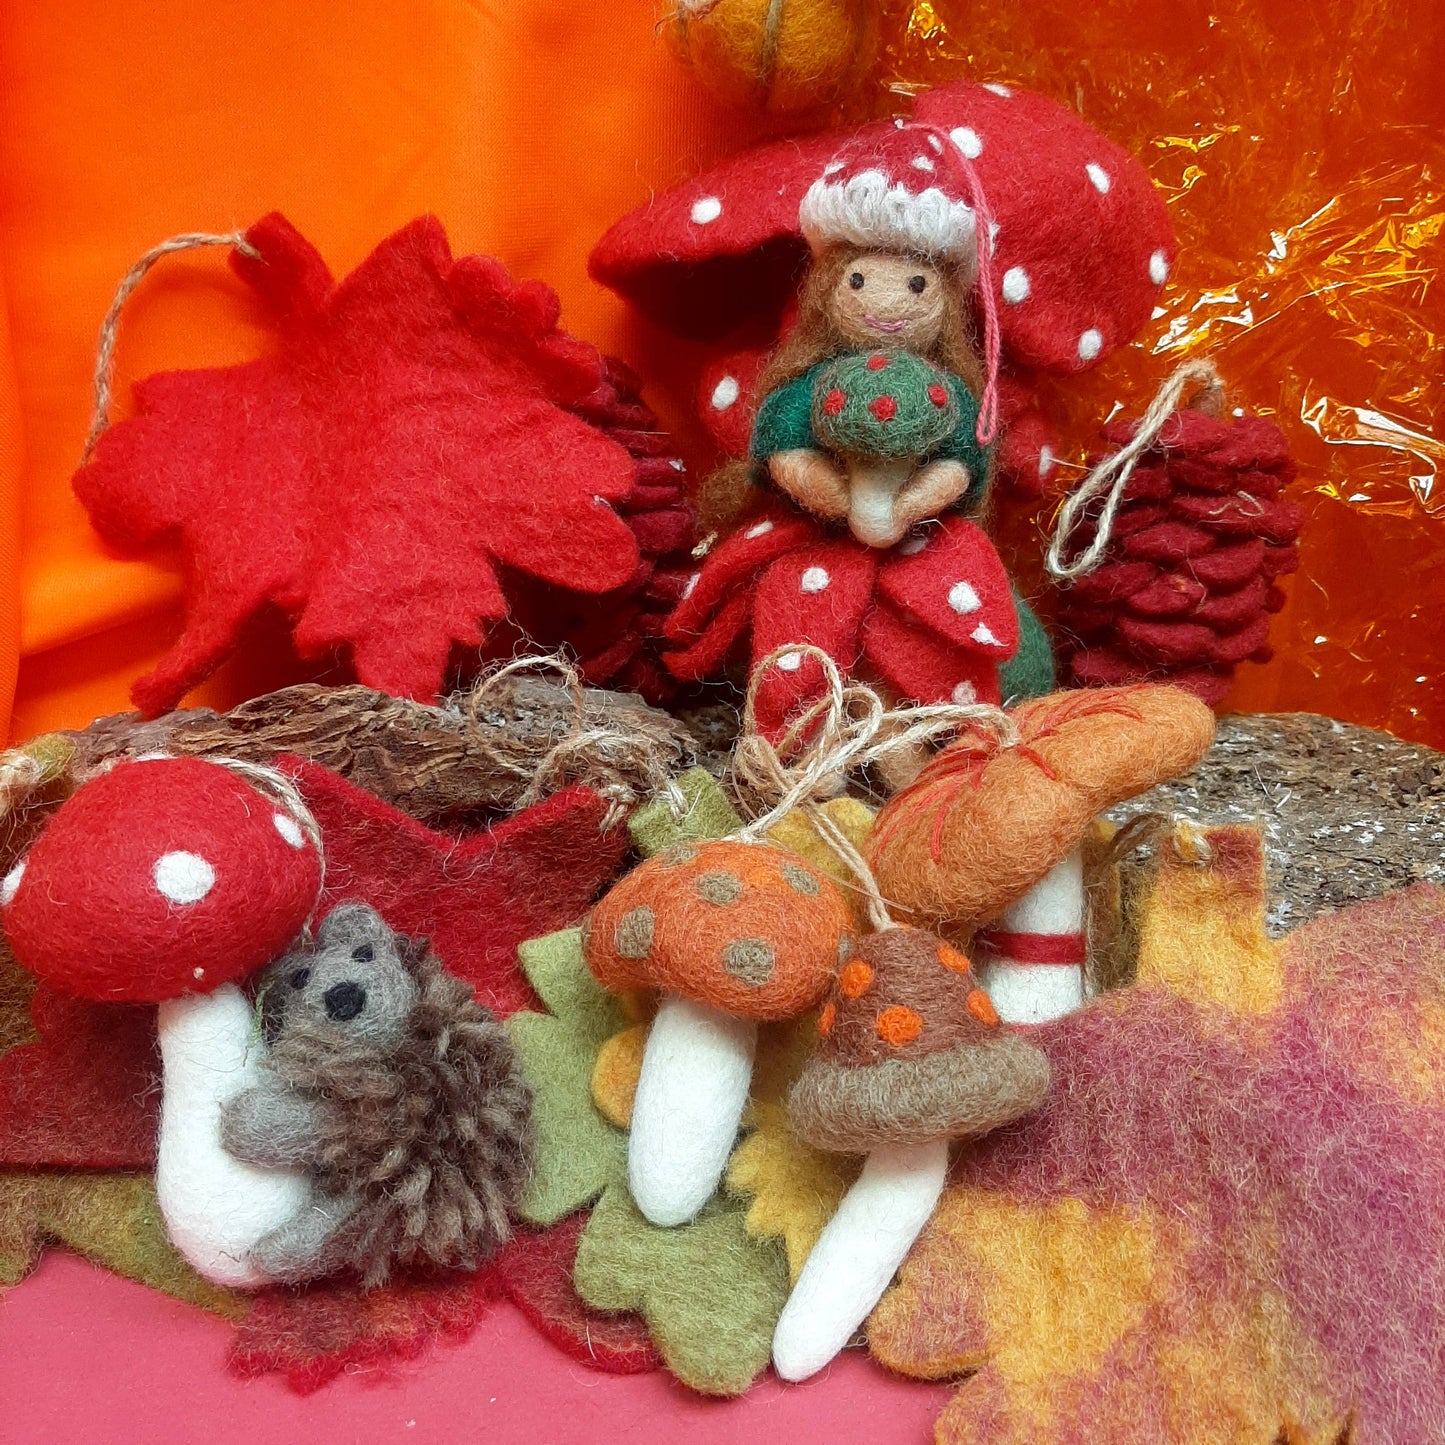 Wild Foraged Mushroom Ornaments